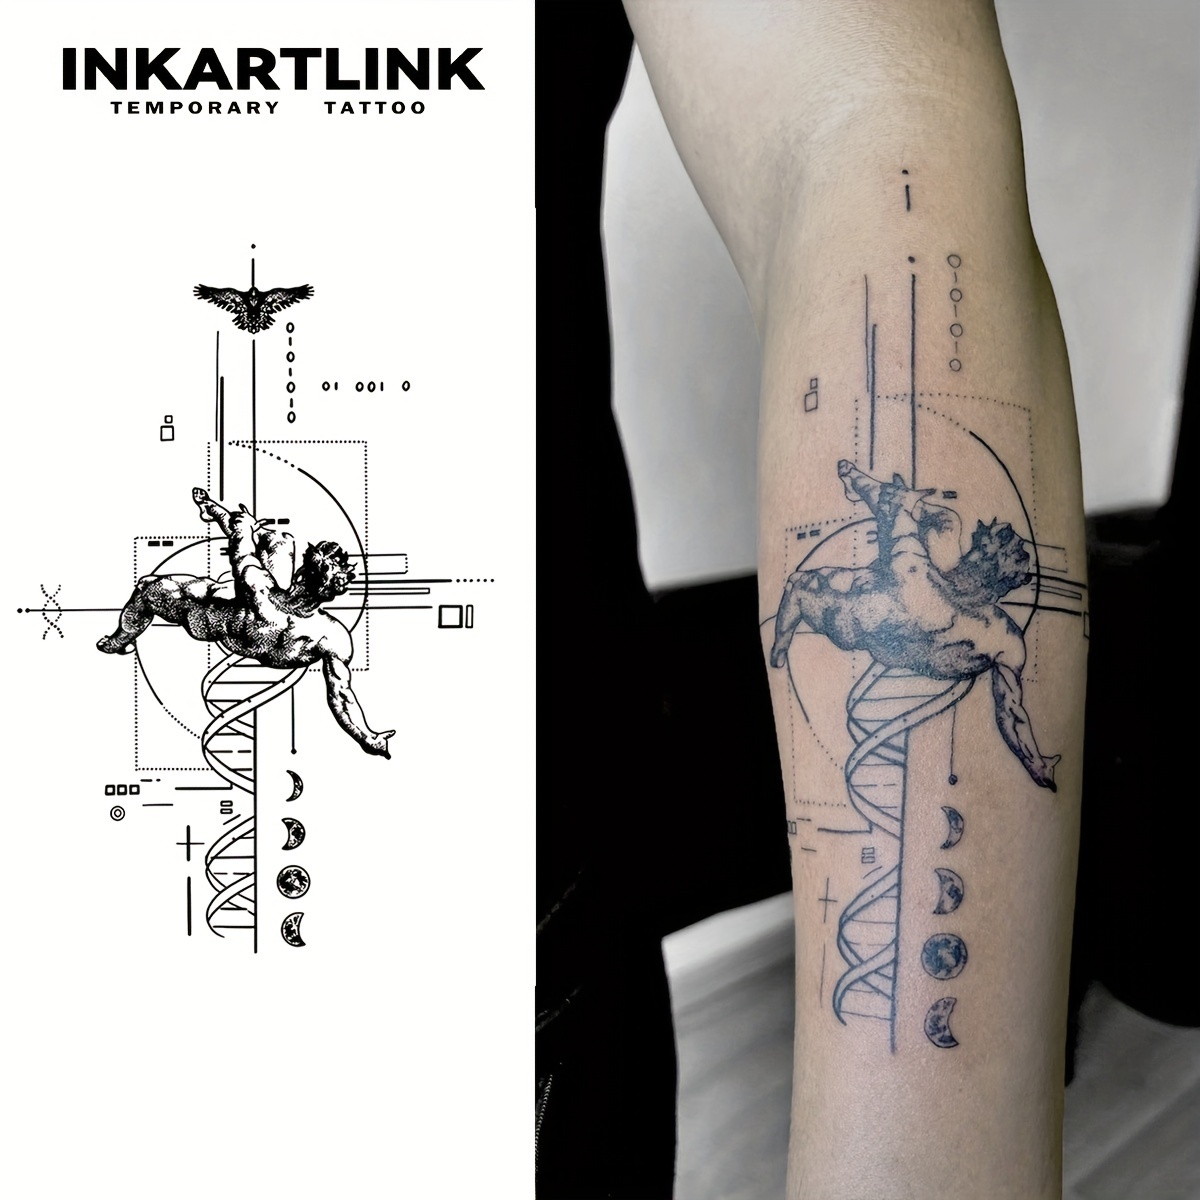 

Inkartlink Revolutionary Technology Tattoos, Semi-permanent Tattoos, Angels, Temporary Tattoos, Fake Tattoos, Waterproof, Authentic Tattoo Appearance, Plant-based, Magic Ink Tattoos